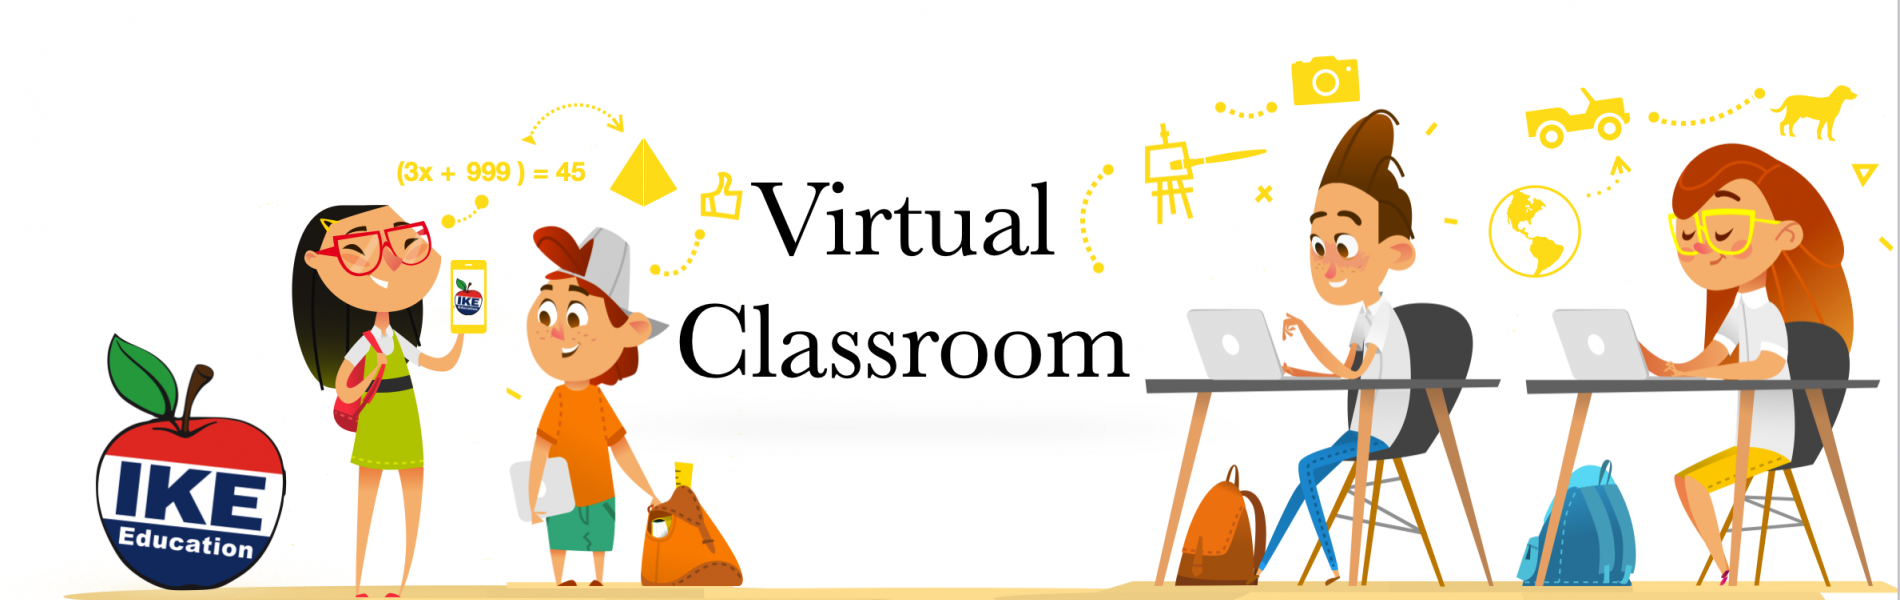 Virtual Classroom banner